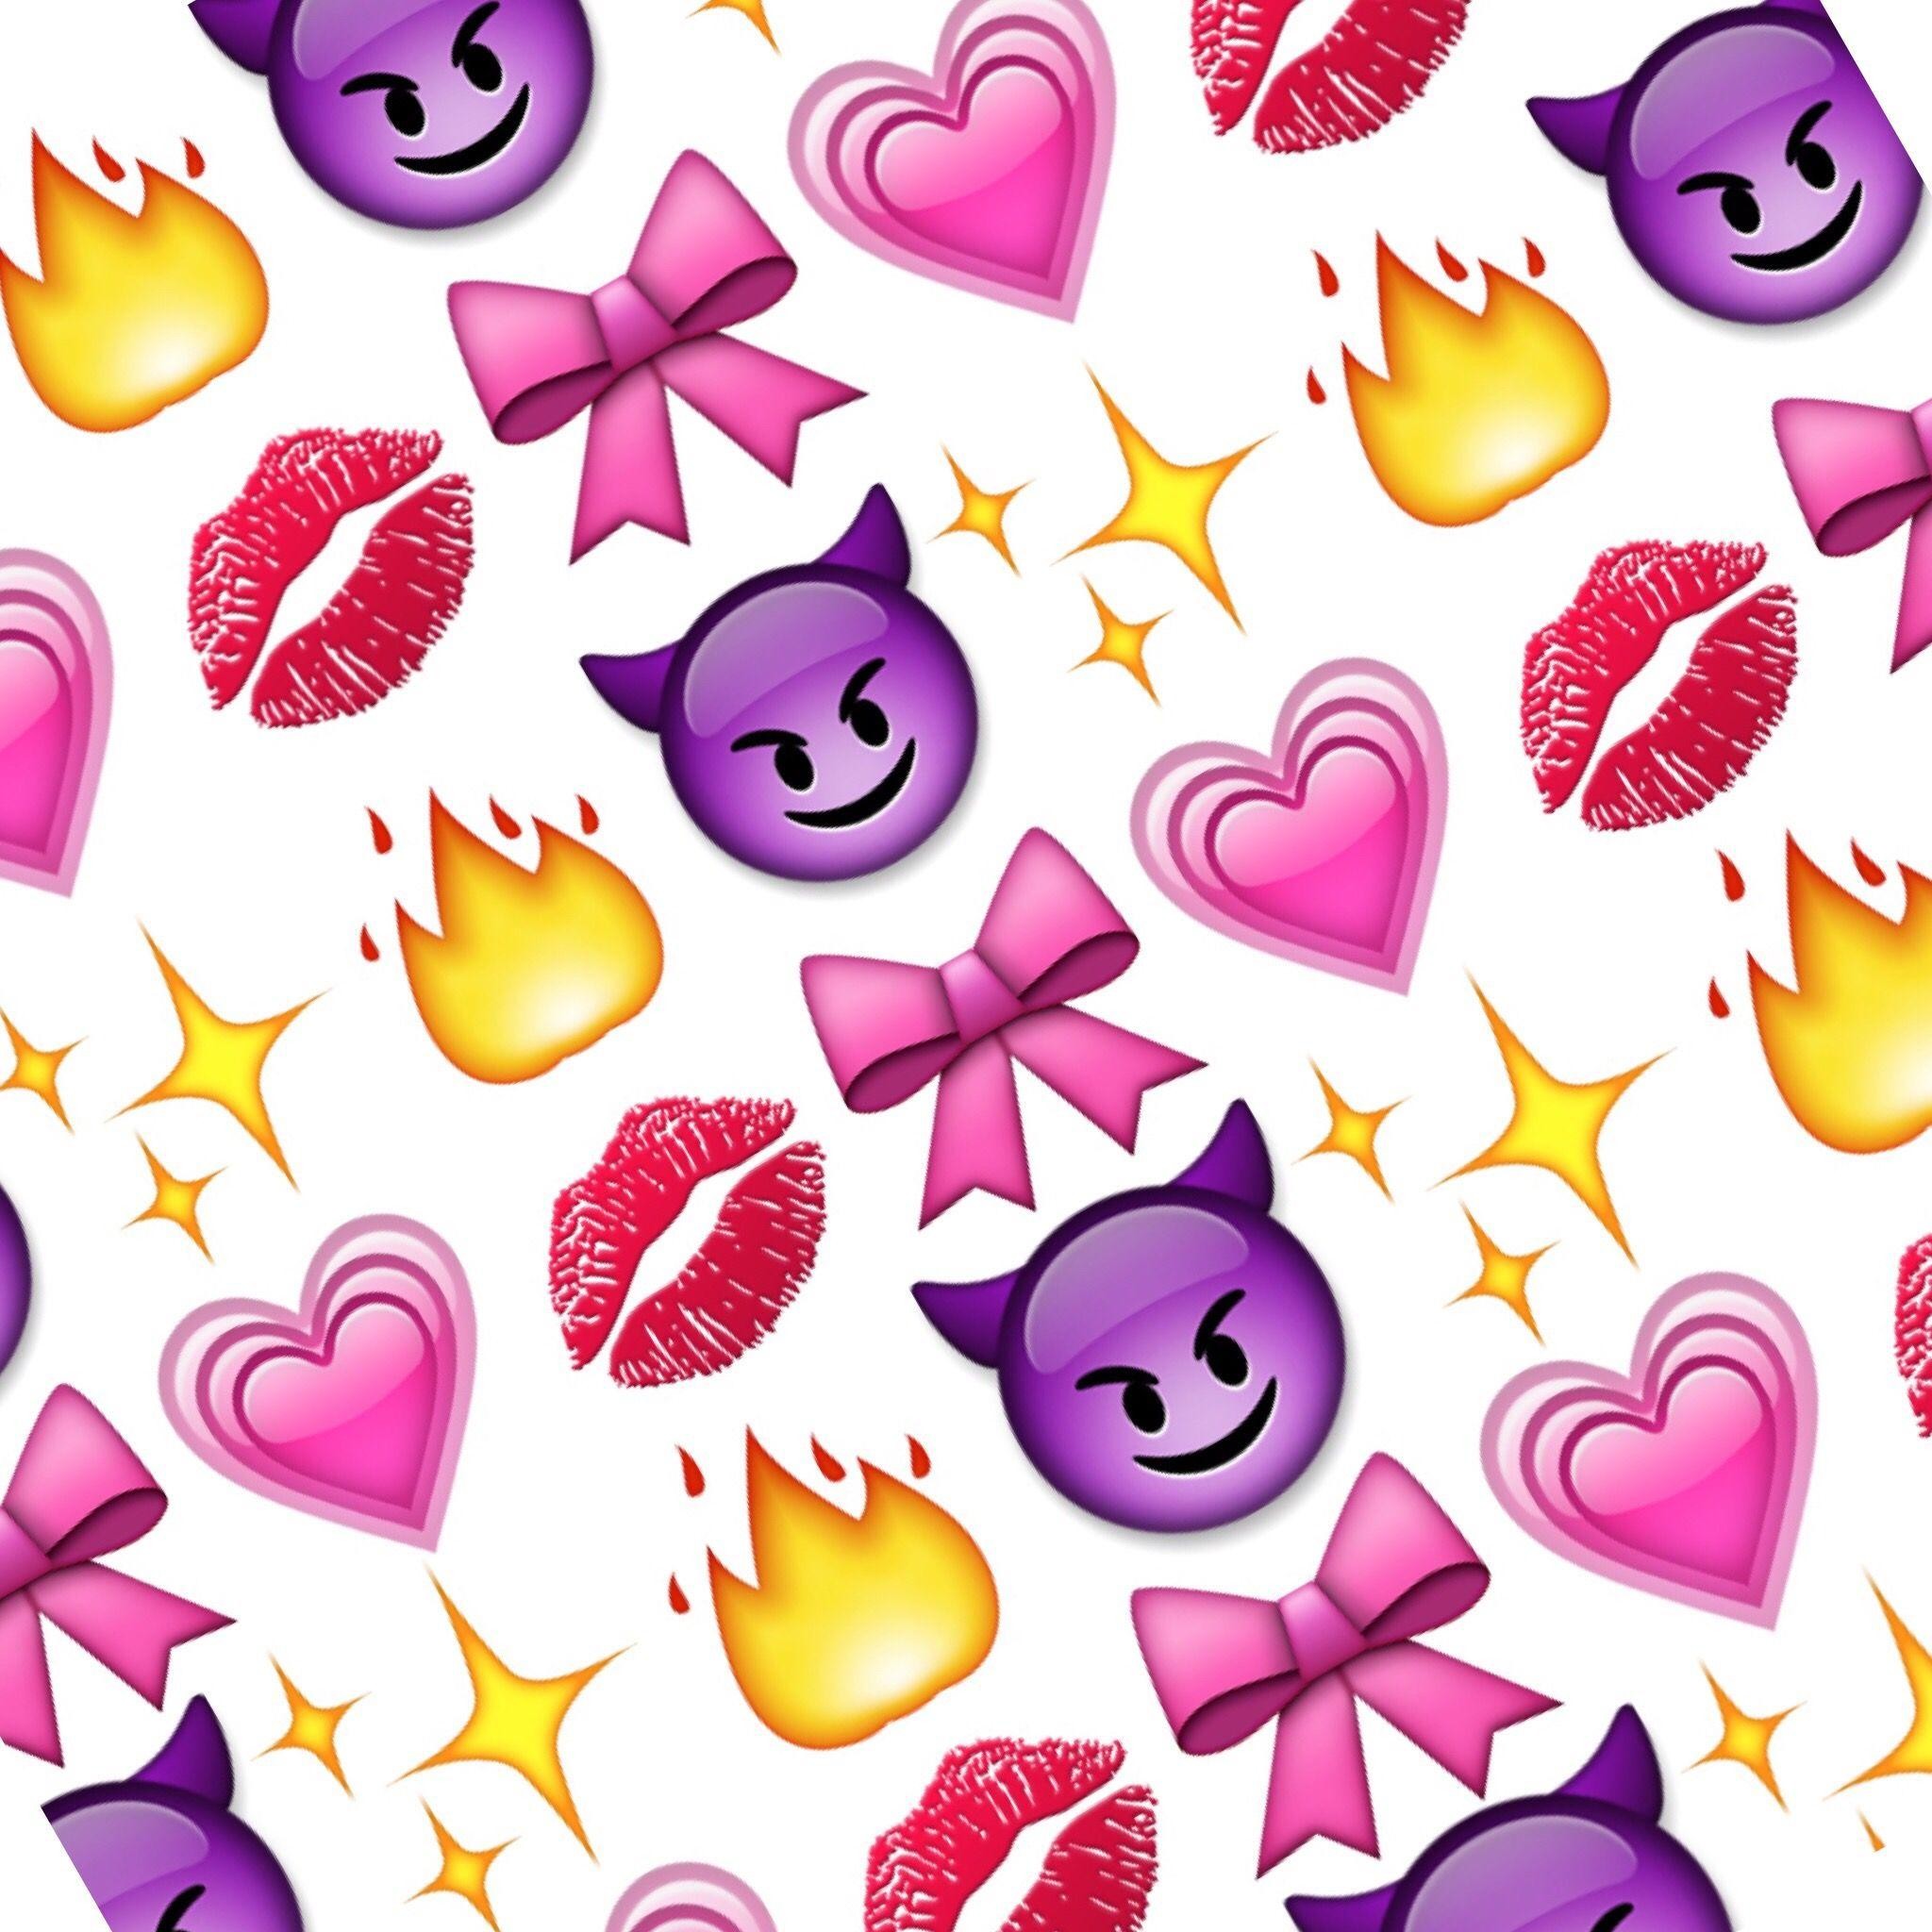 2048x2048 Emojis, Wallpapers and Emoji wallpaper on Pinterest